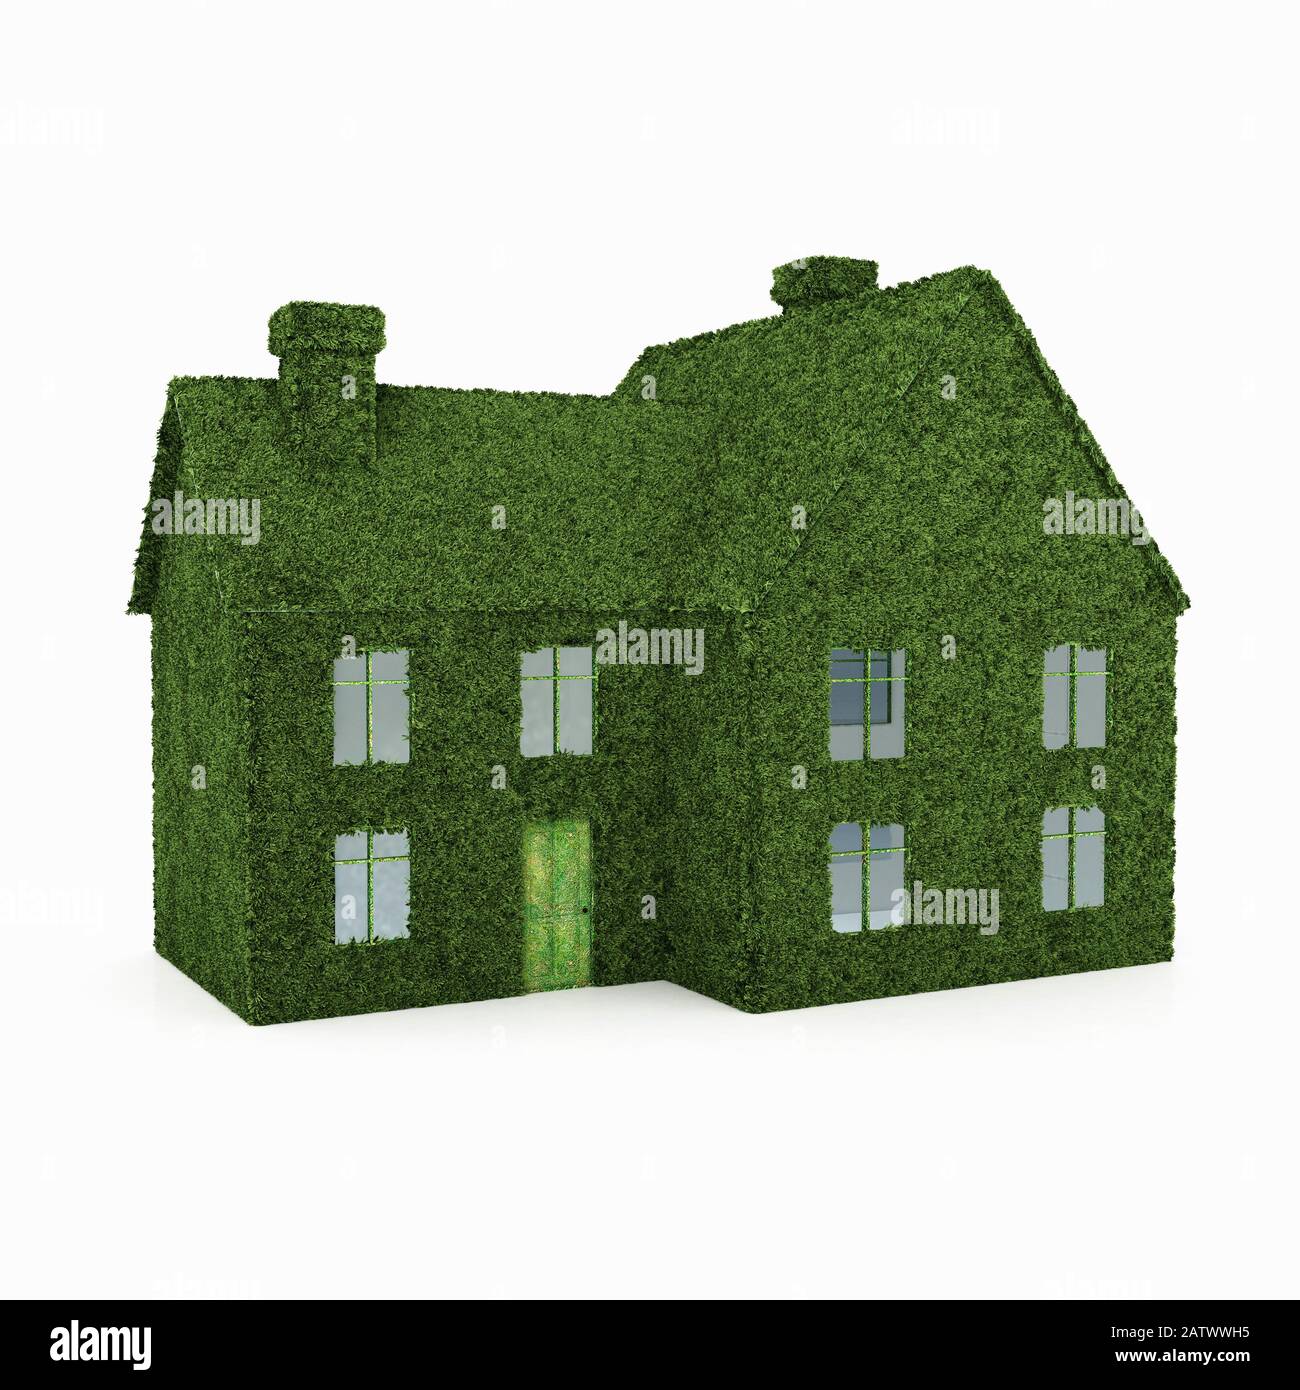 Öko-Haus oder Öko-Wohnkonzept, grünes Wohnen Stockfoto